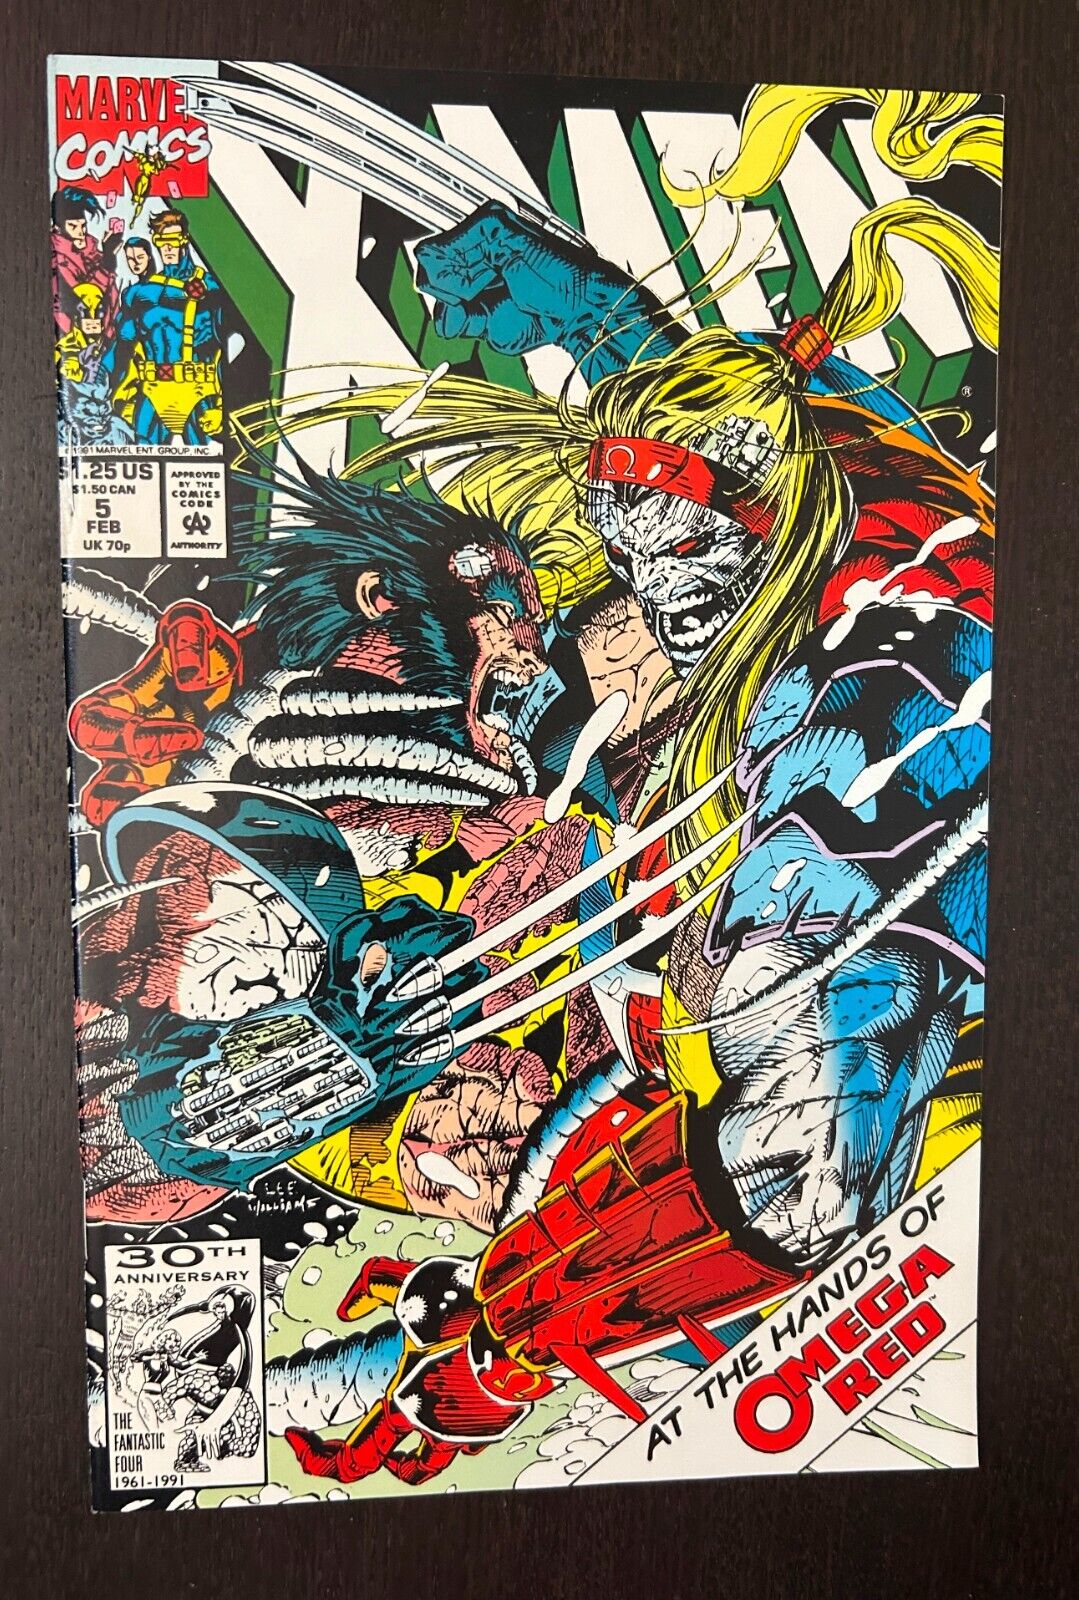 X-MEN #5 (Marvel Comics 1992) -- Jim Lee -- OMEGA RED -- NM-